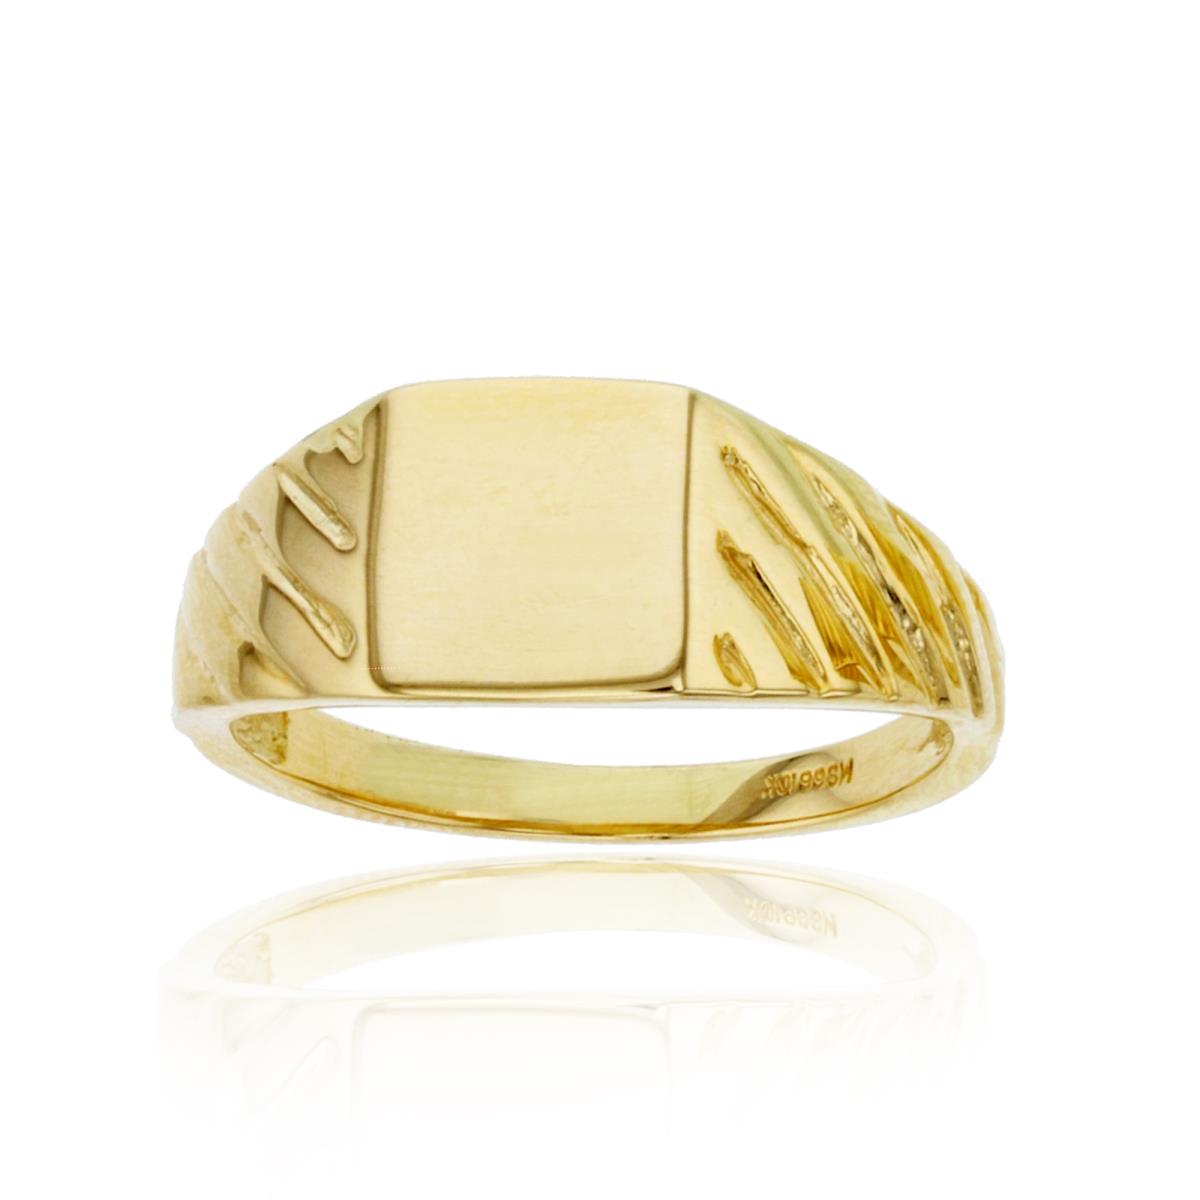 10K Yellow Gold Grad Textured Engravable Men's Ring